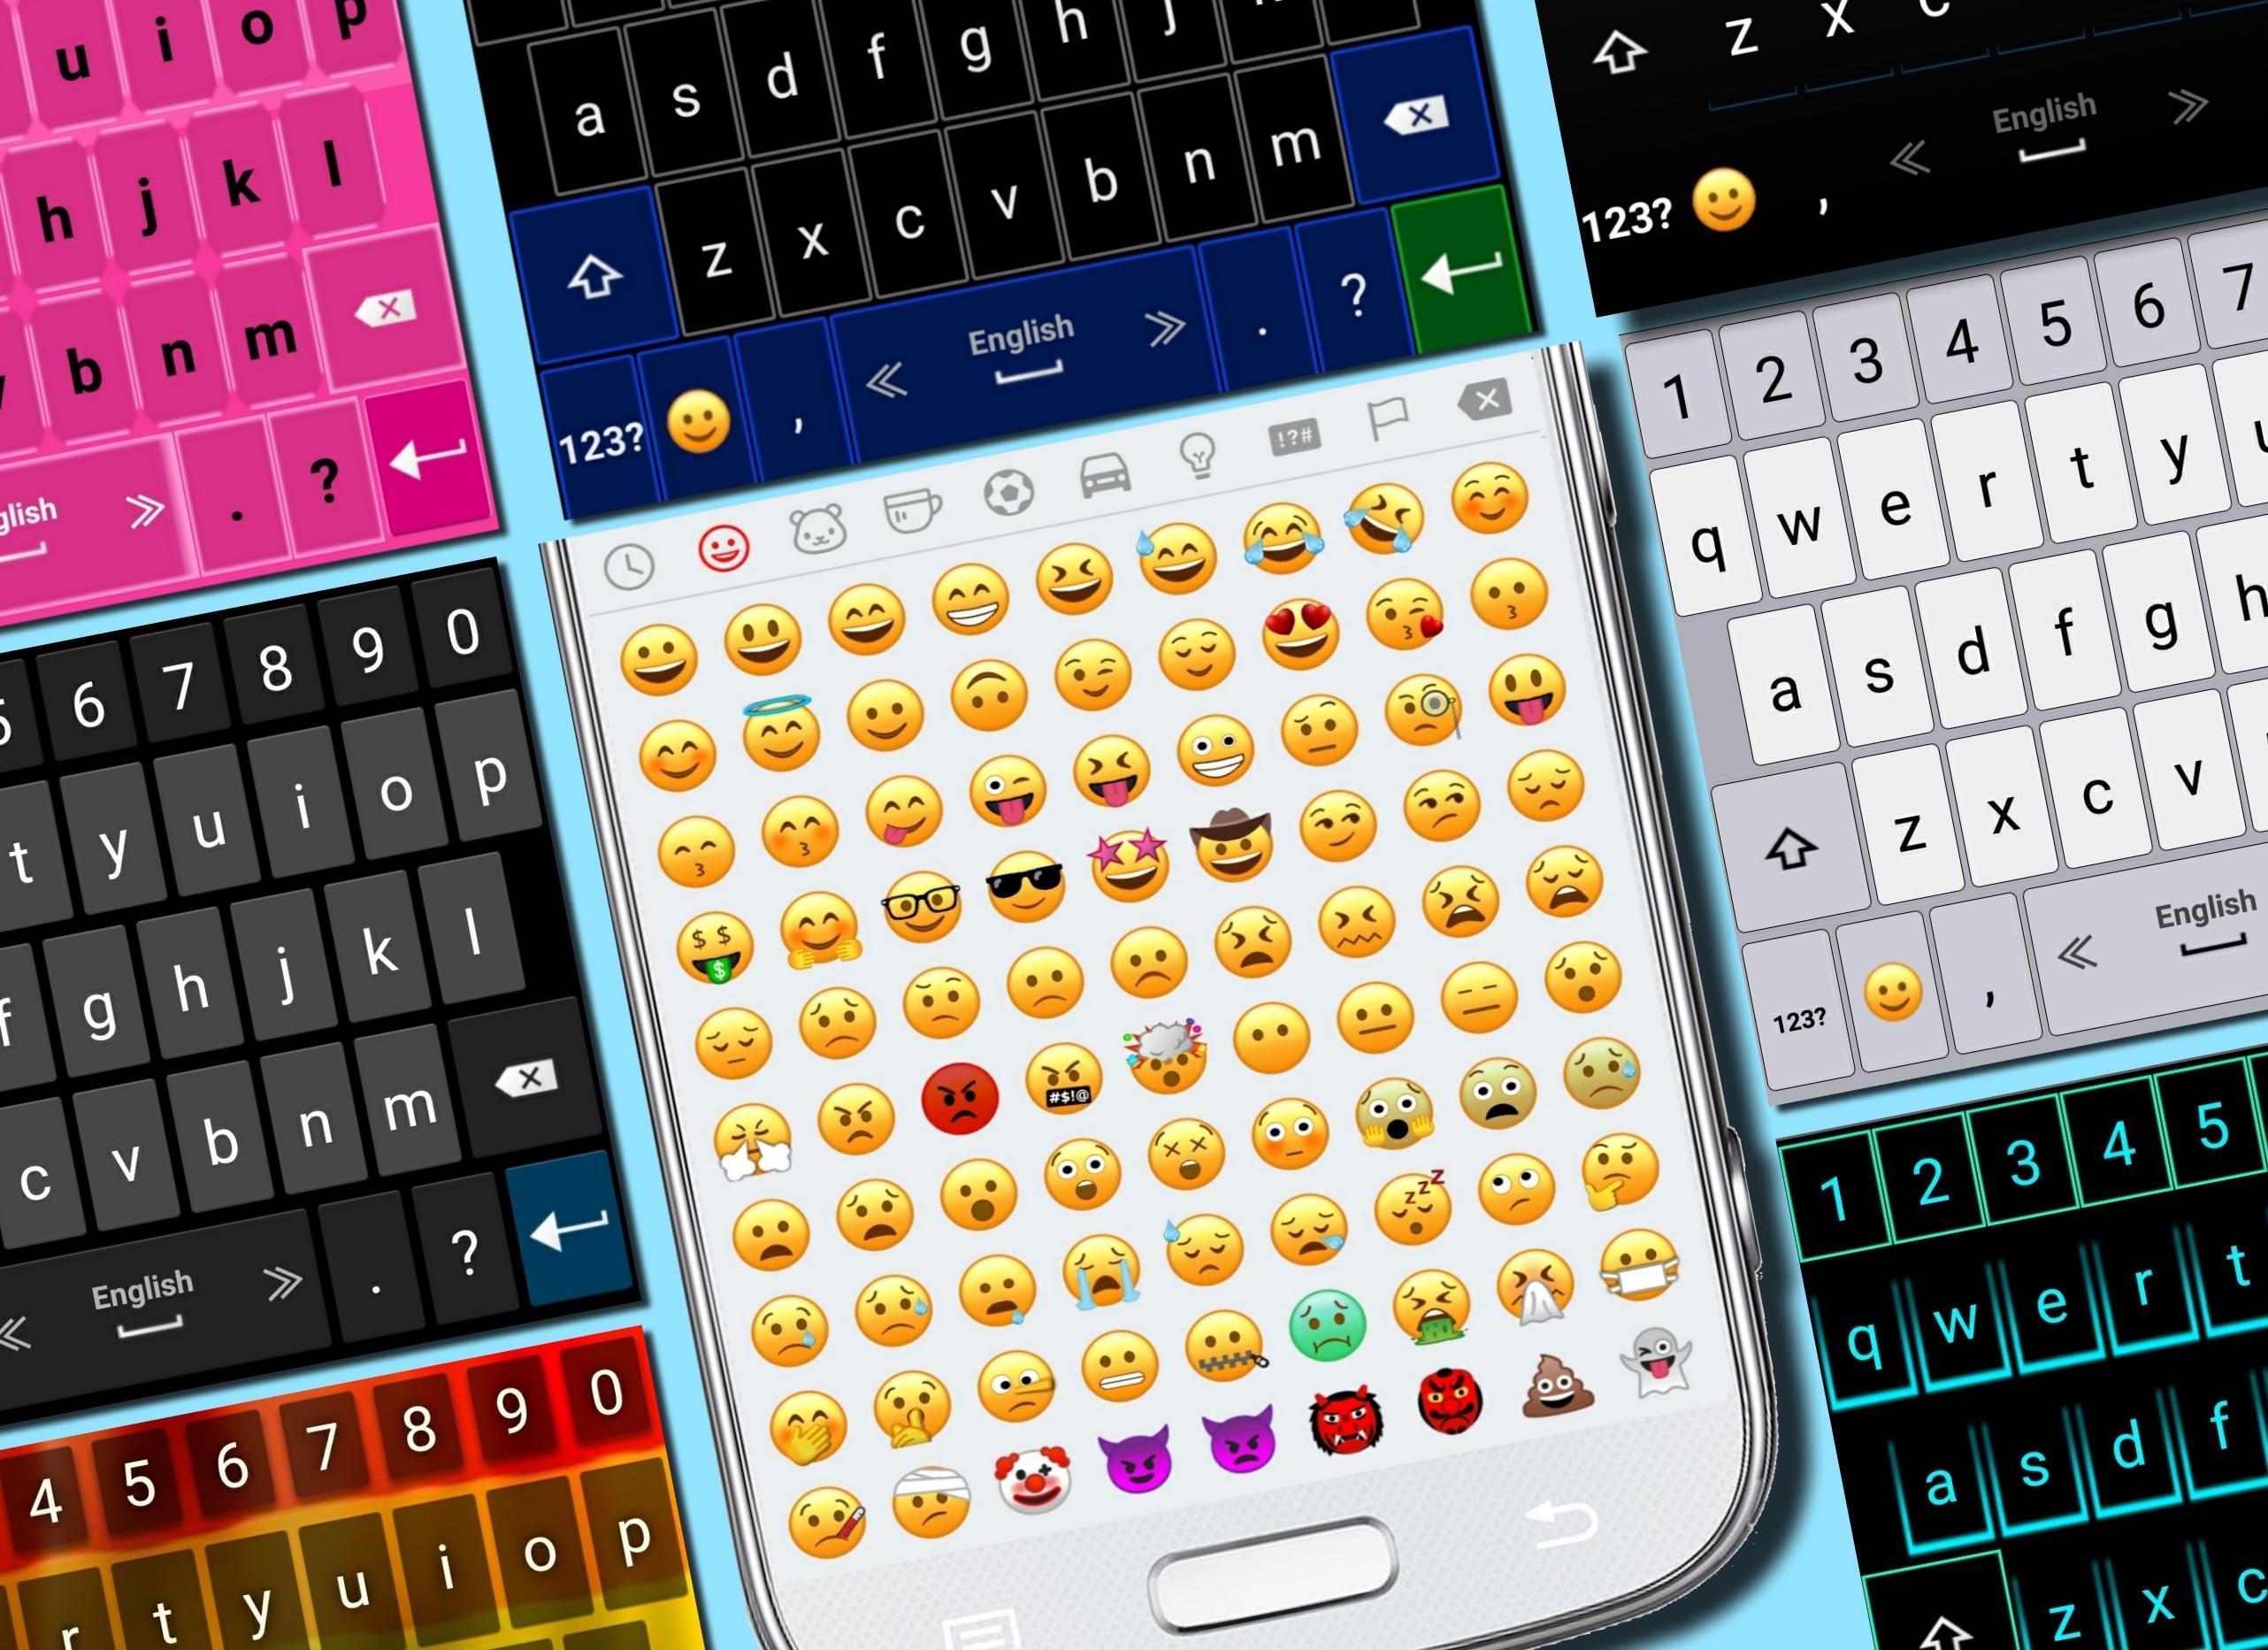 Emoji Keyboard 2020 for Android - APK Download